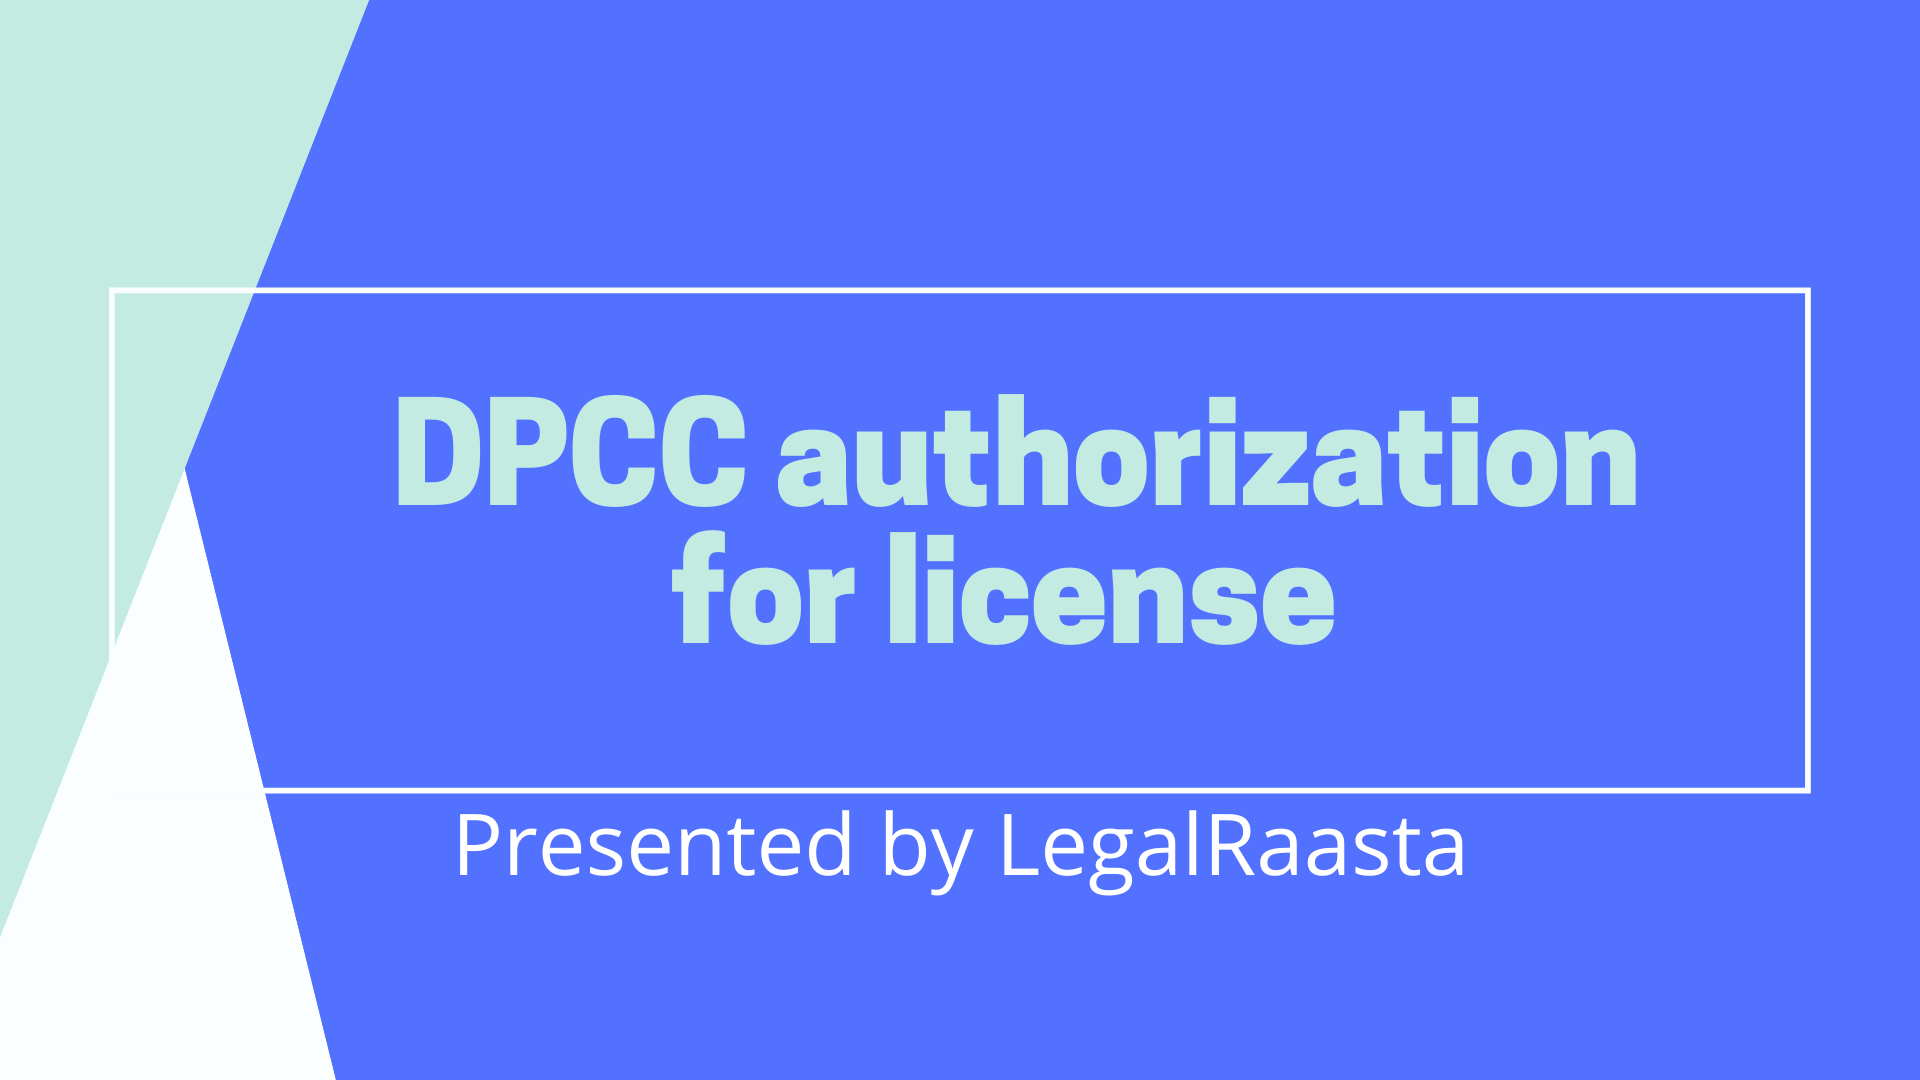 DPCC authorization